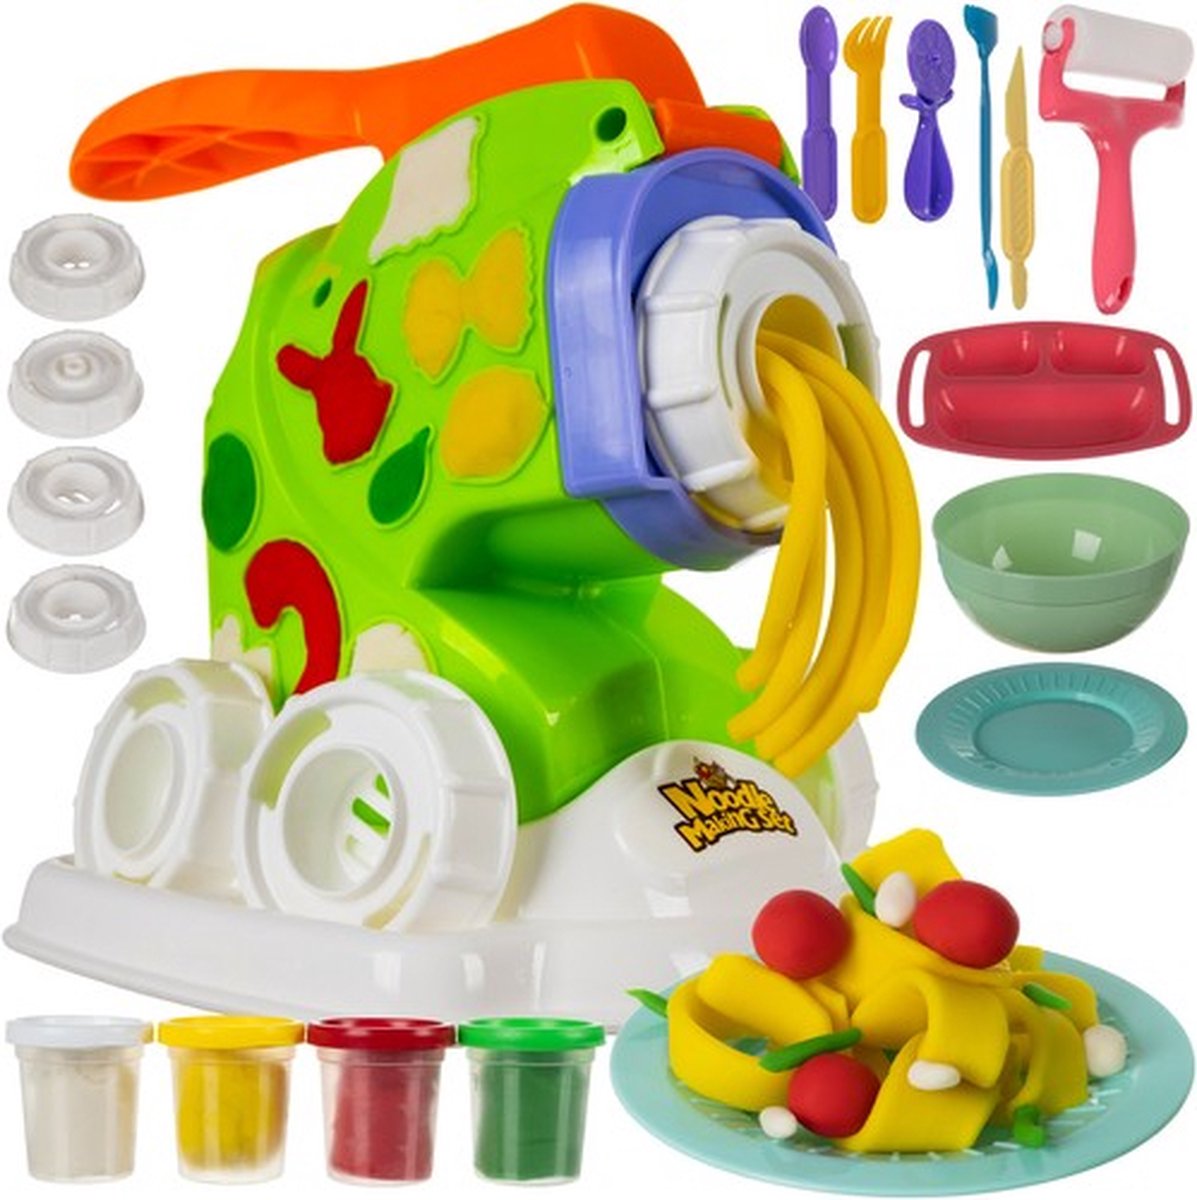 Kruzzel klei set noodle maken - Colour clay diy noodle maker set met 4 kleuren klei - Inclusief pastamachine - STEM speelgoed - kruzzel